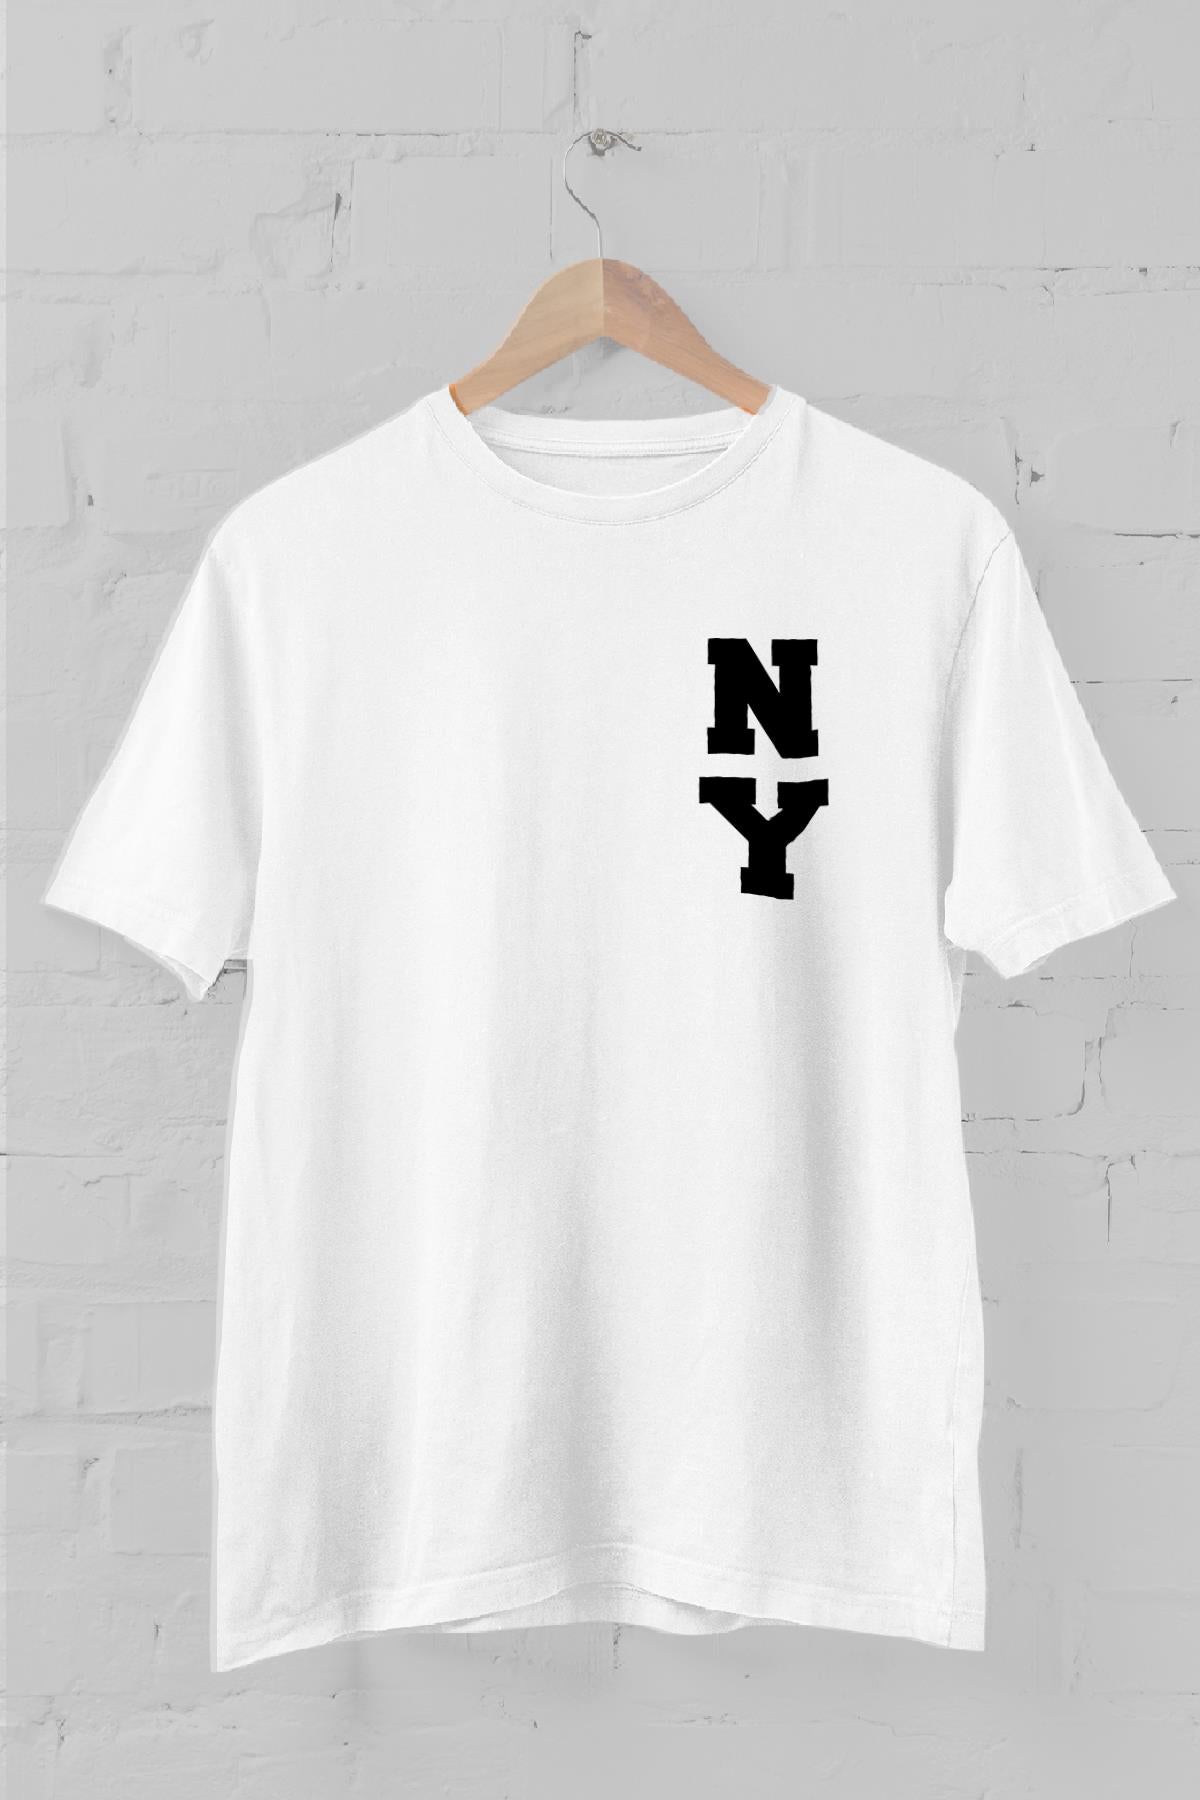 New York Arma Printed Crew Neck Men's T -shirt